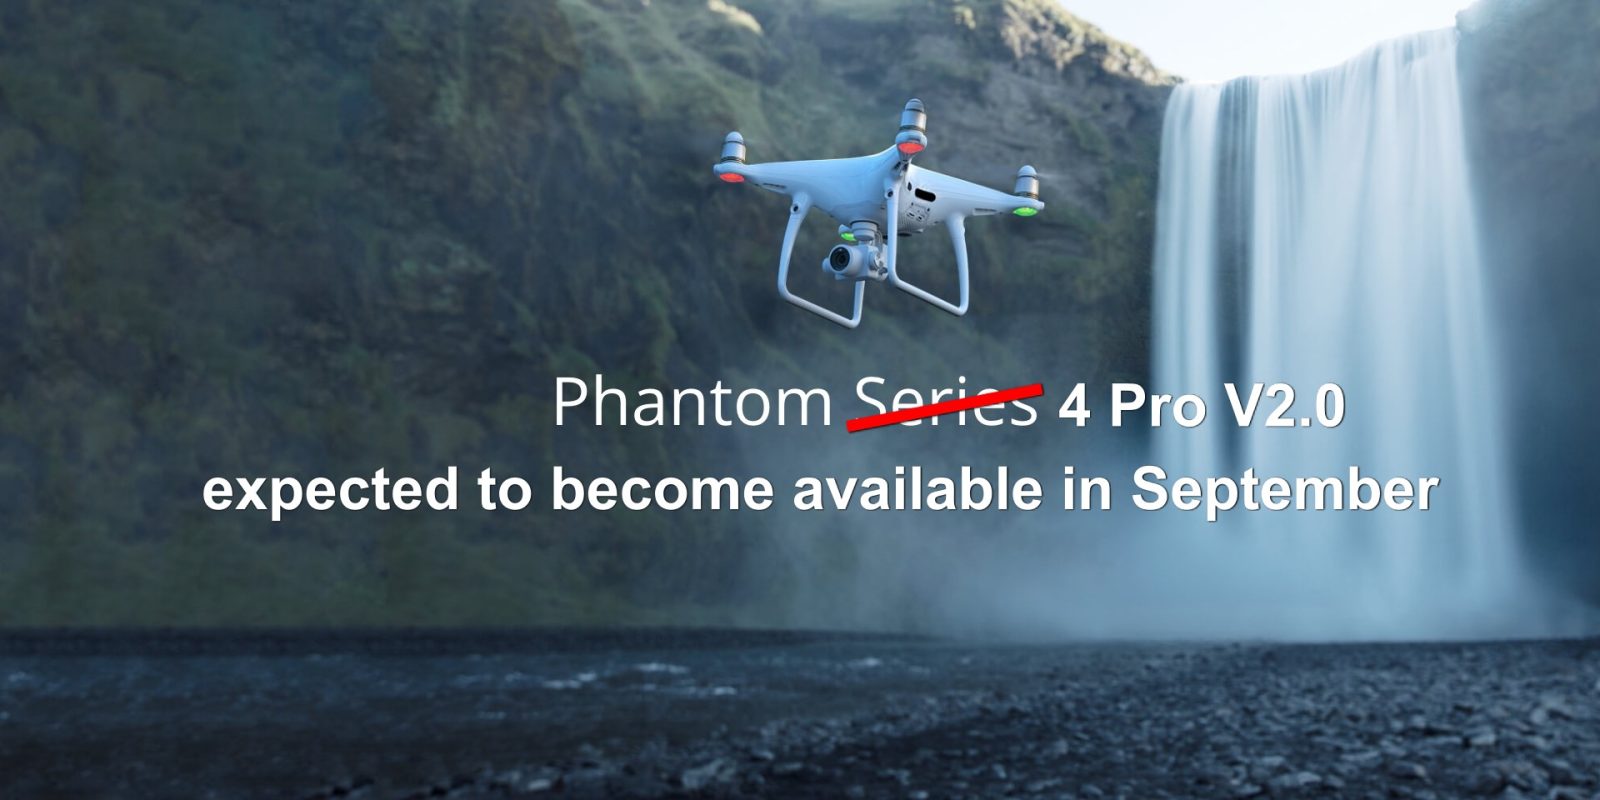 DJI-Phantom-4-Pro-V2.0-is-still-expected-to-become-available-in-September.jpg